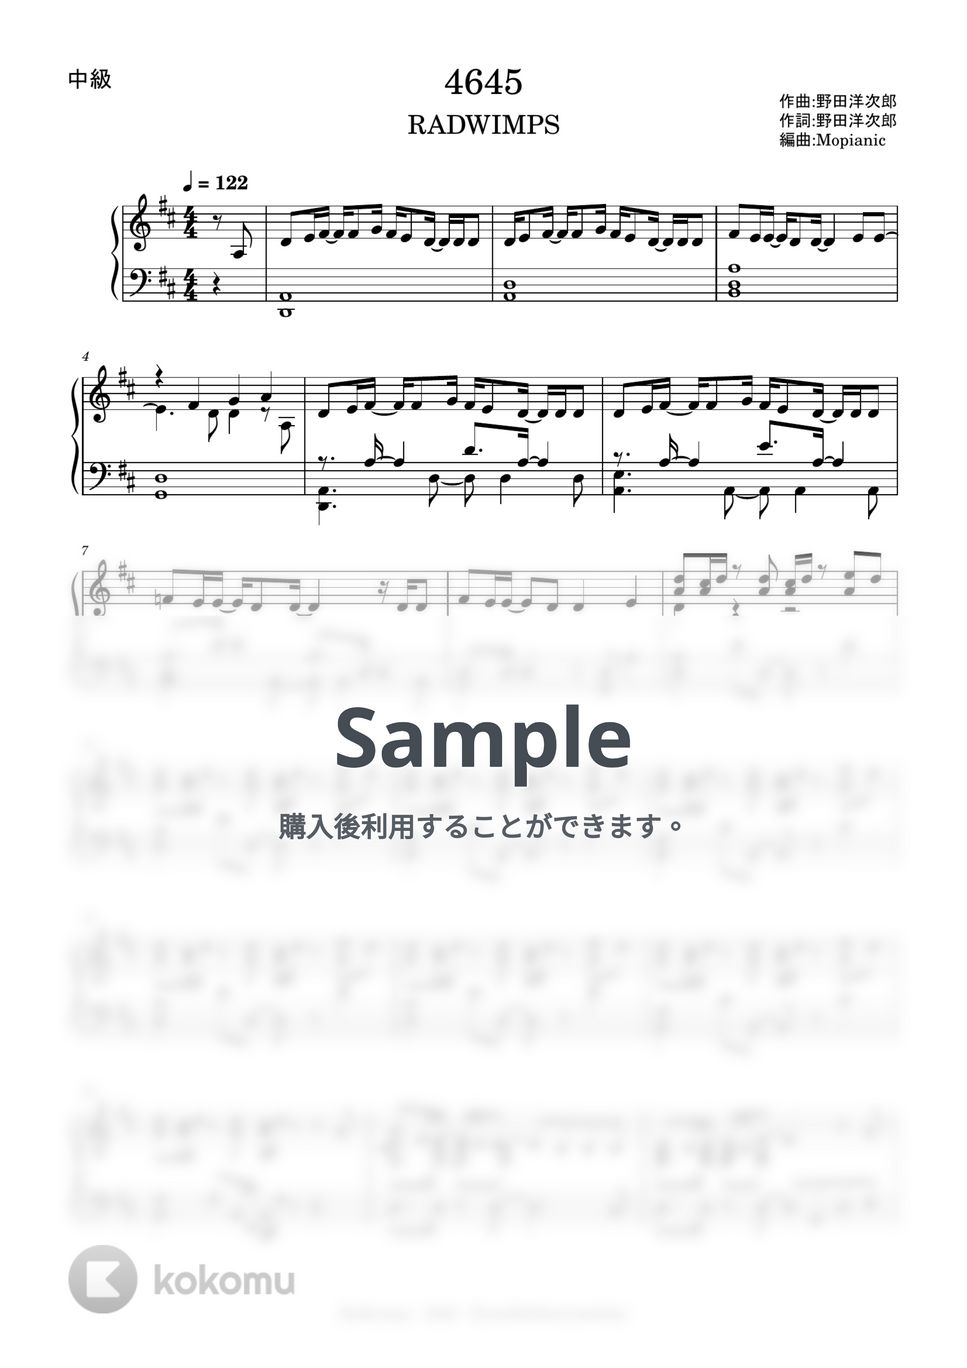 RADWIMPS - 4645 (intermediate, piano) by Mopianic